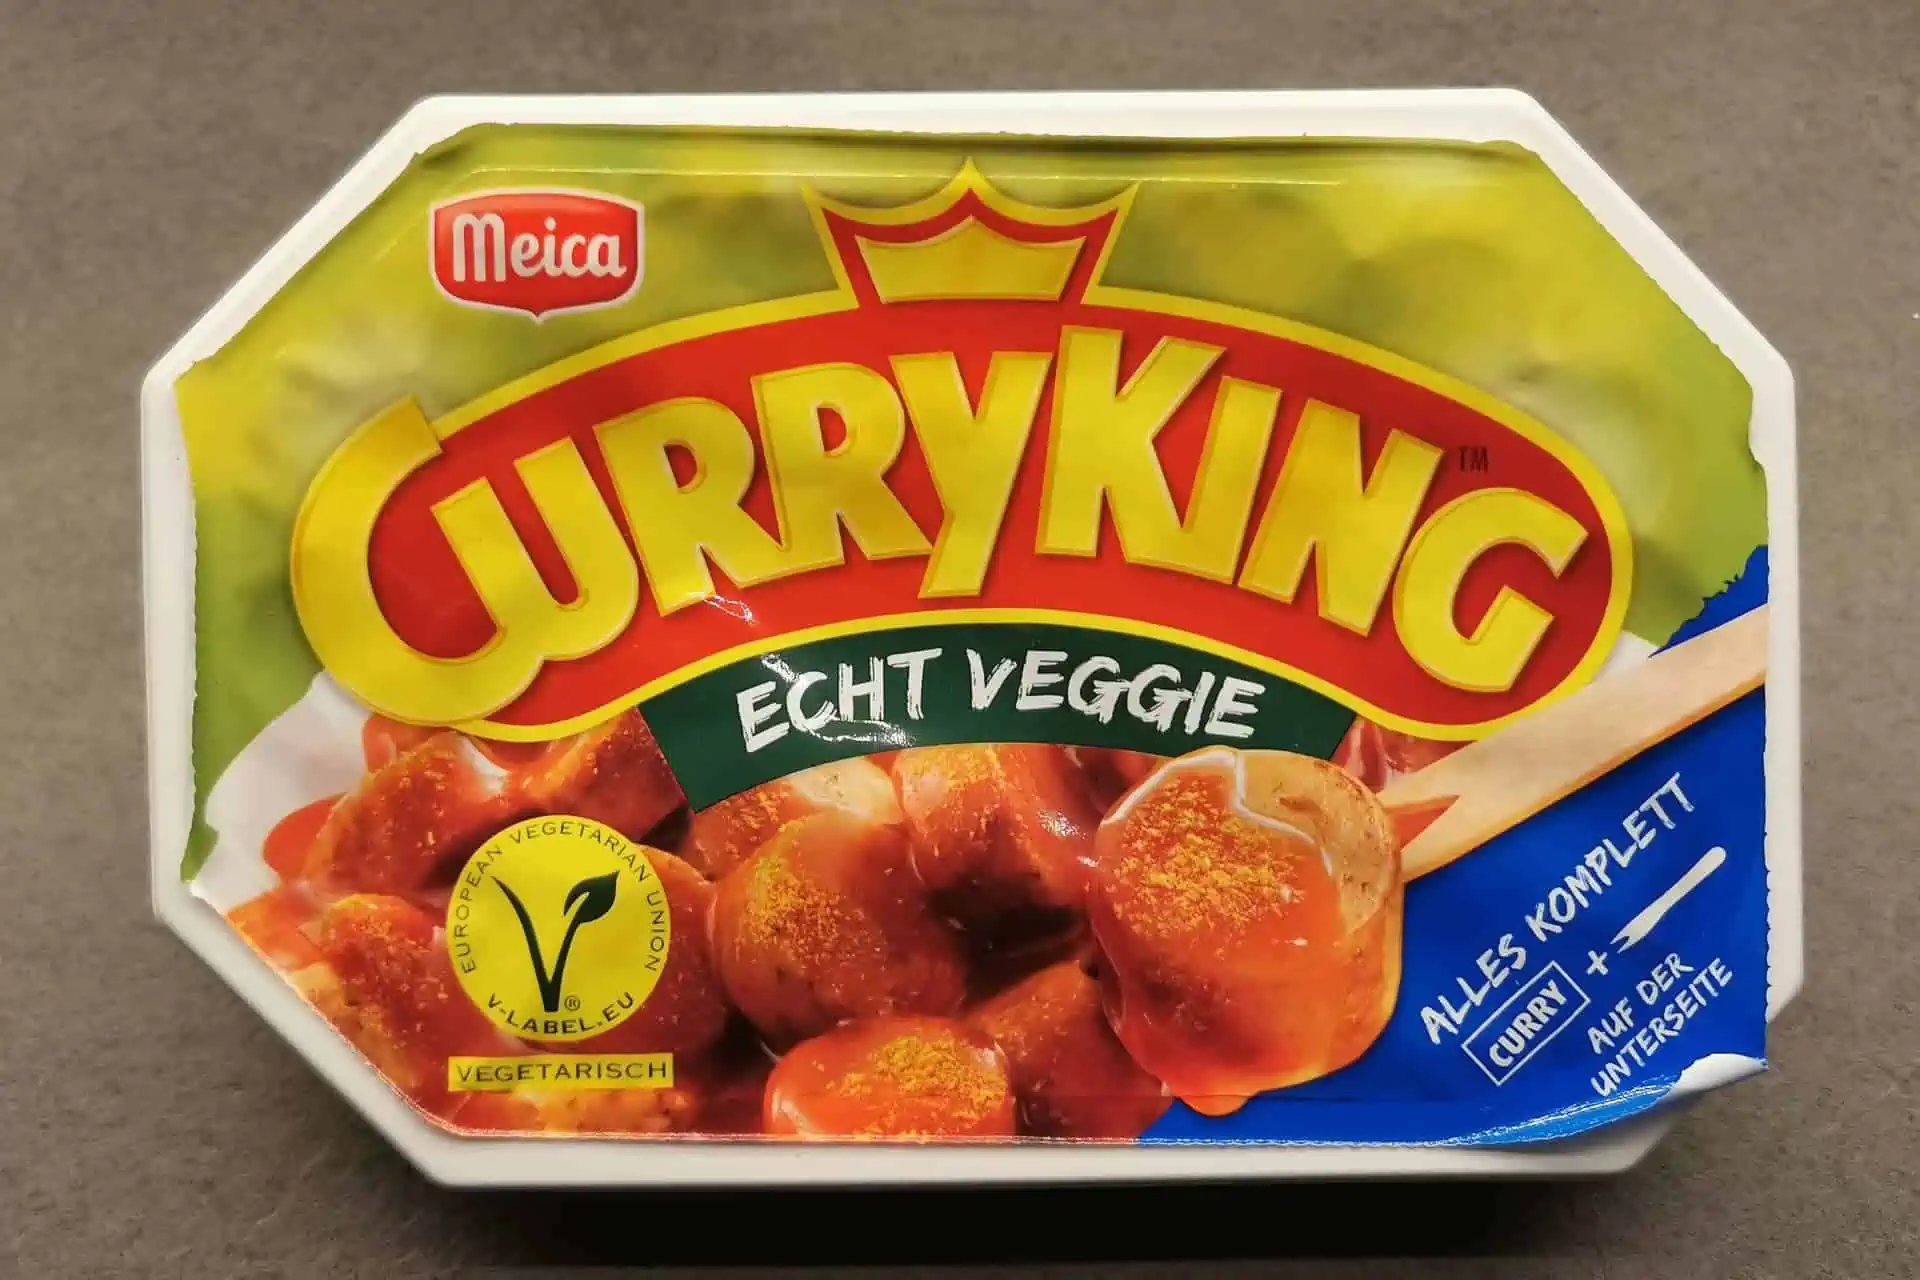 Meica Curry - King echt Veggie